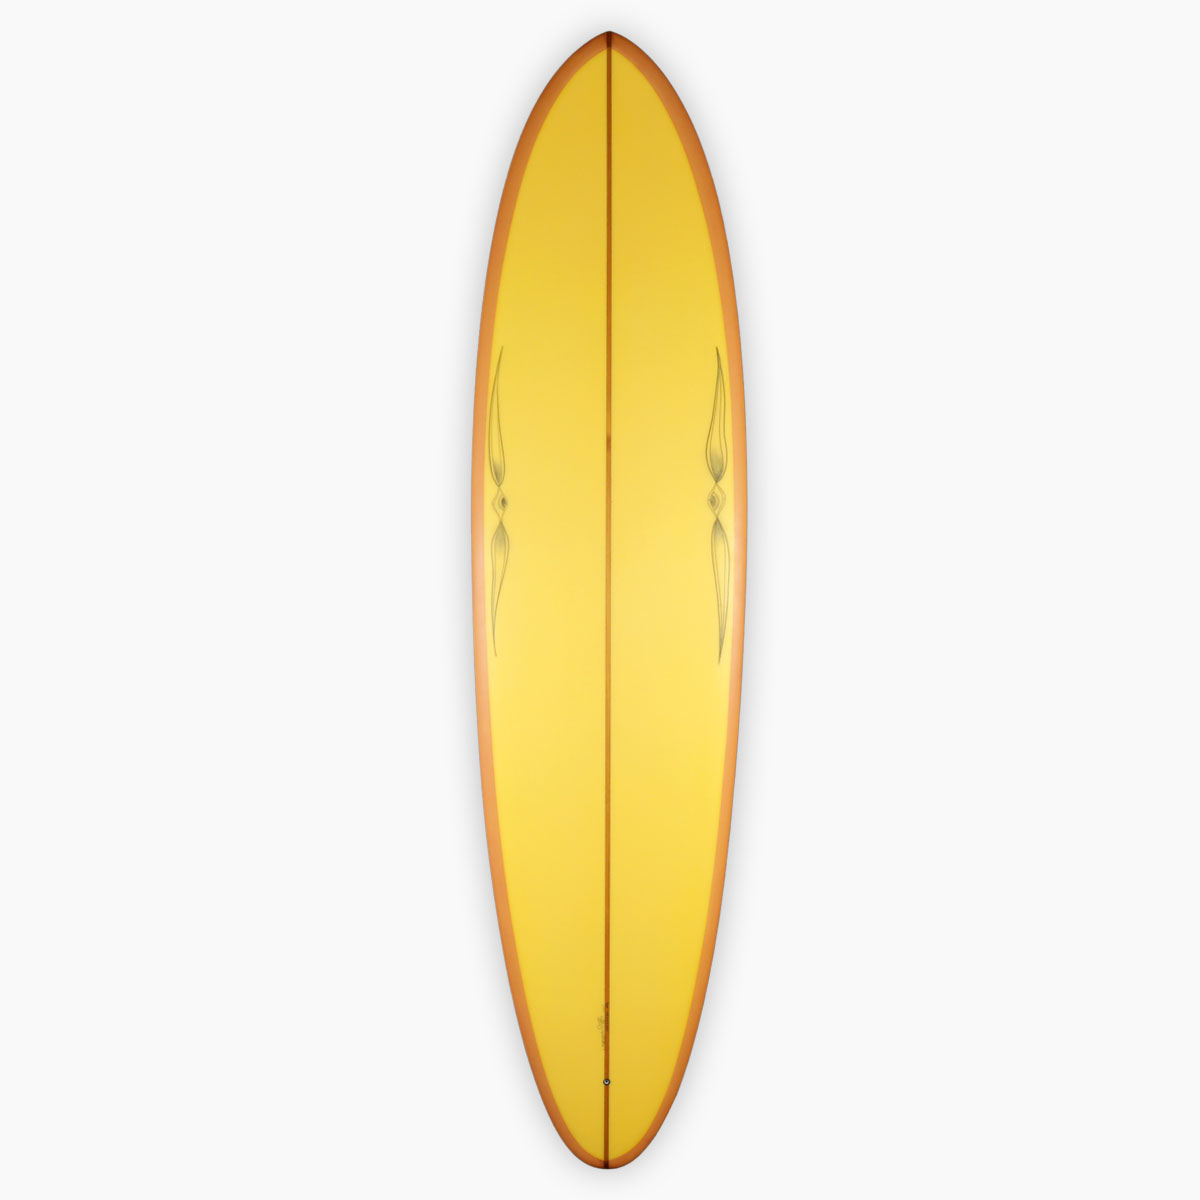 SurfBoardNet / サーフボード ブランド:RYAN BURCH